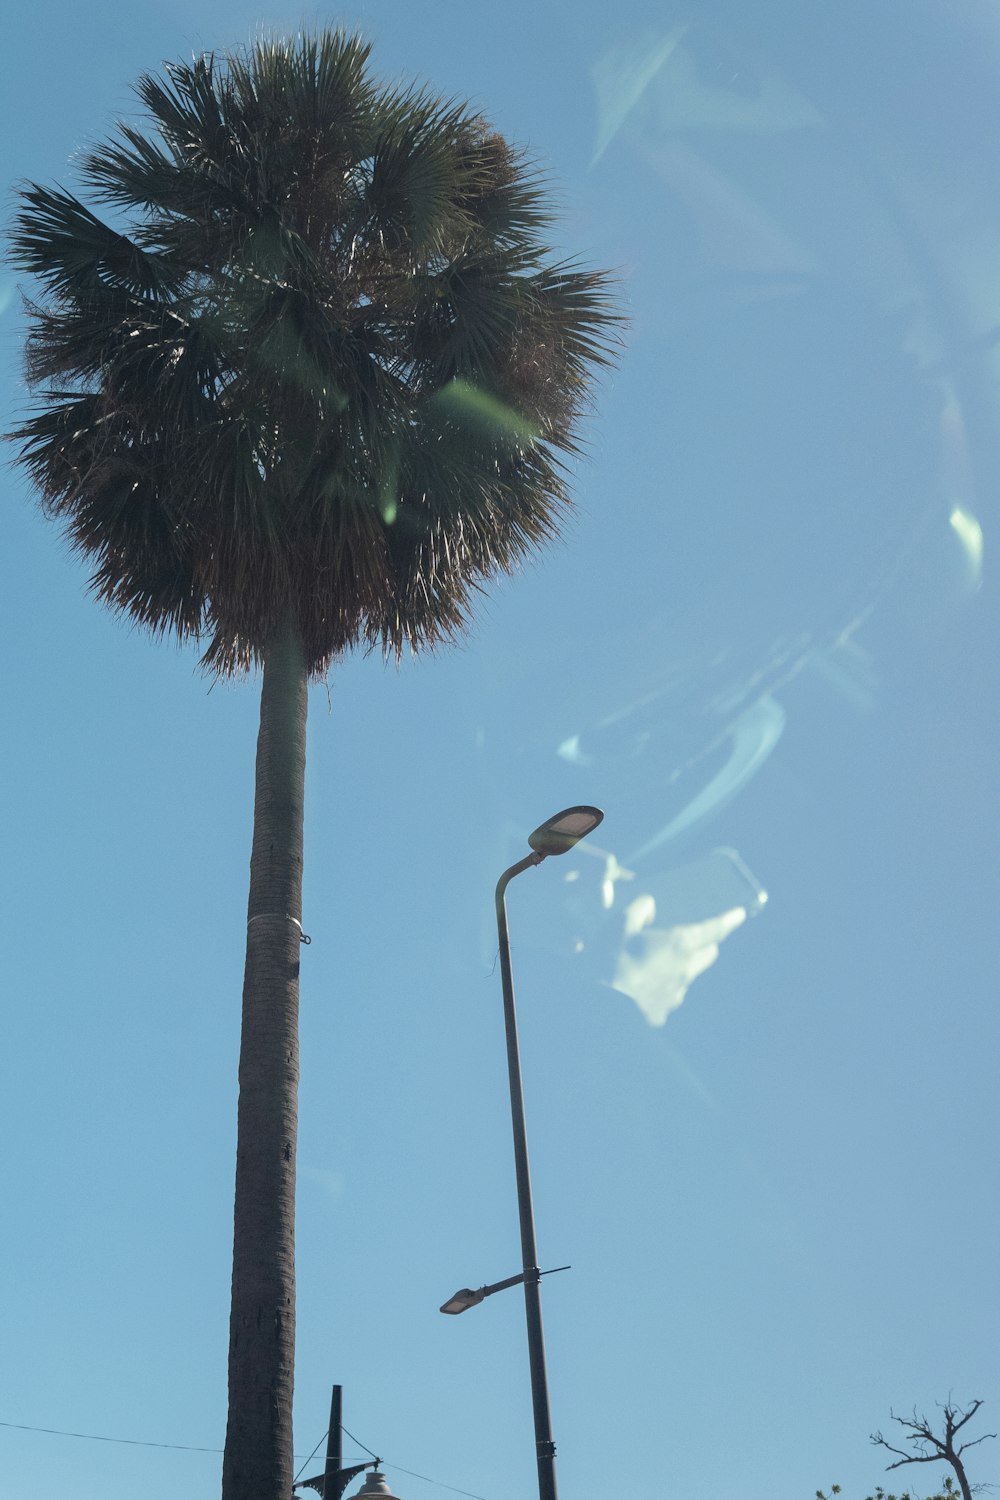 a tall palm tree sitting next to a street light